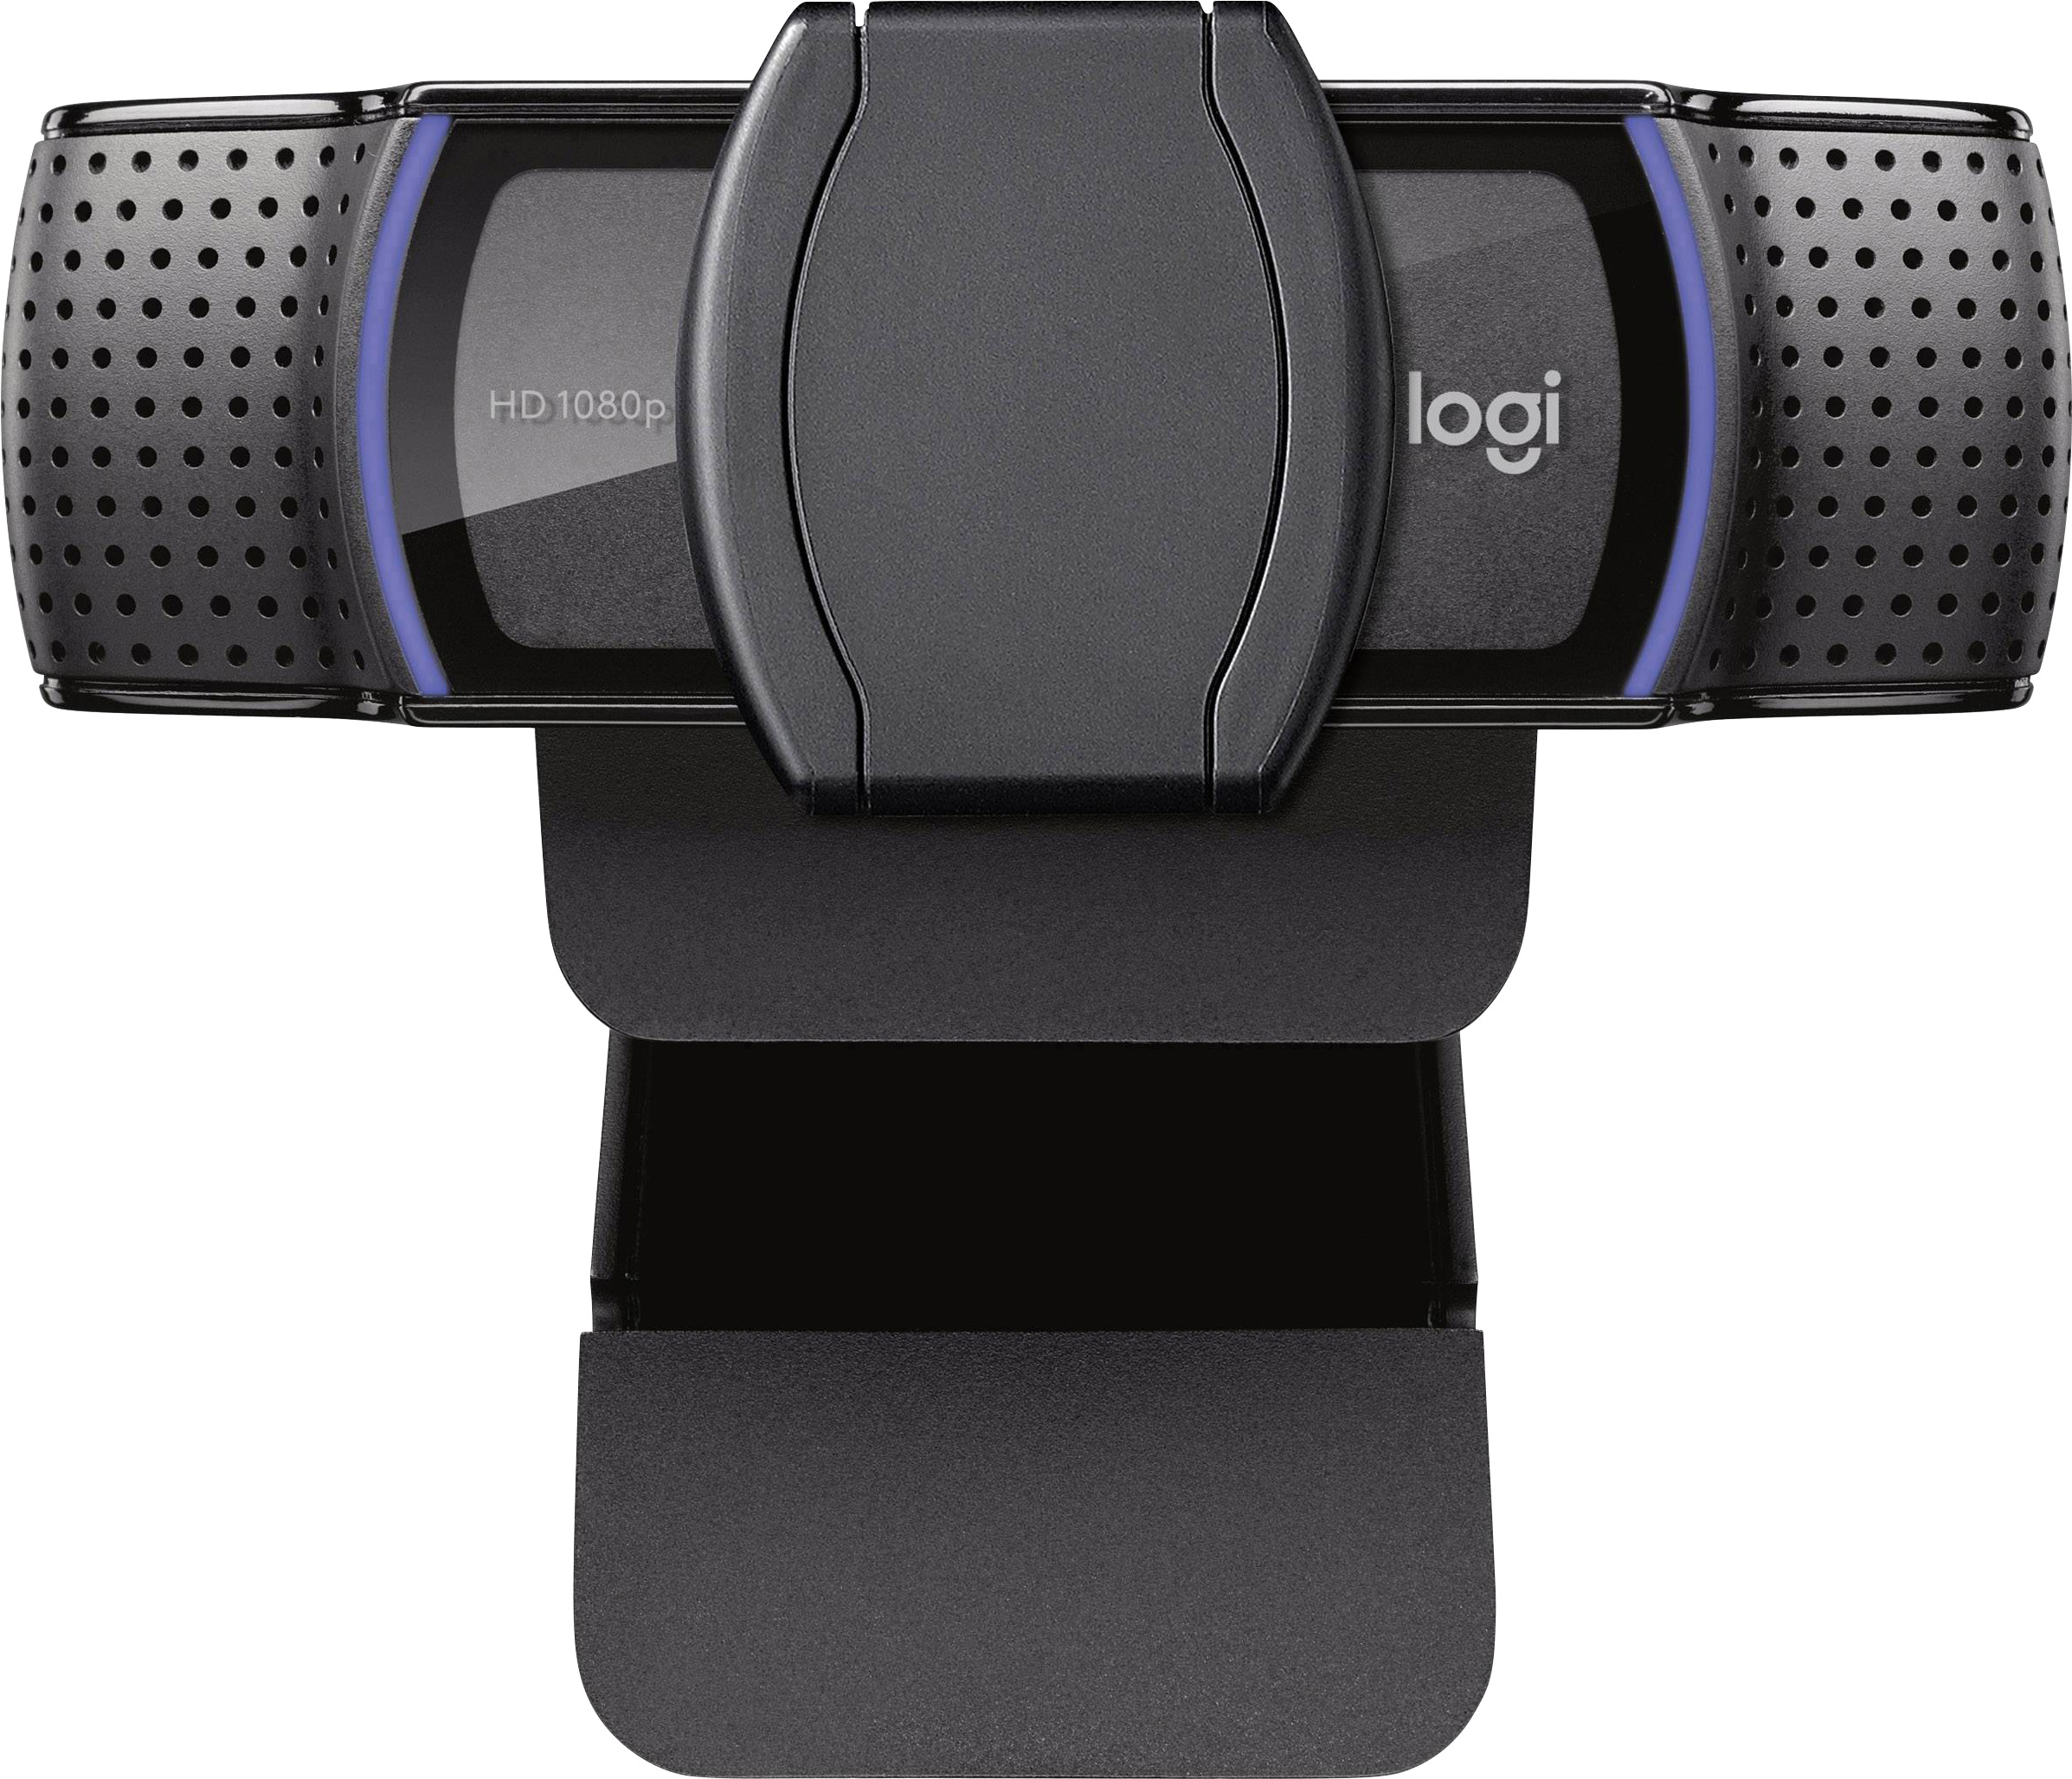 Logitech Webcam C920e Pro, Full HD 1080p, schwarz 1920x1080, 30 FPS, USB, Privacy Shutter, Business